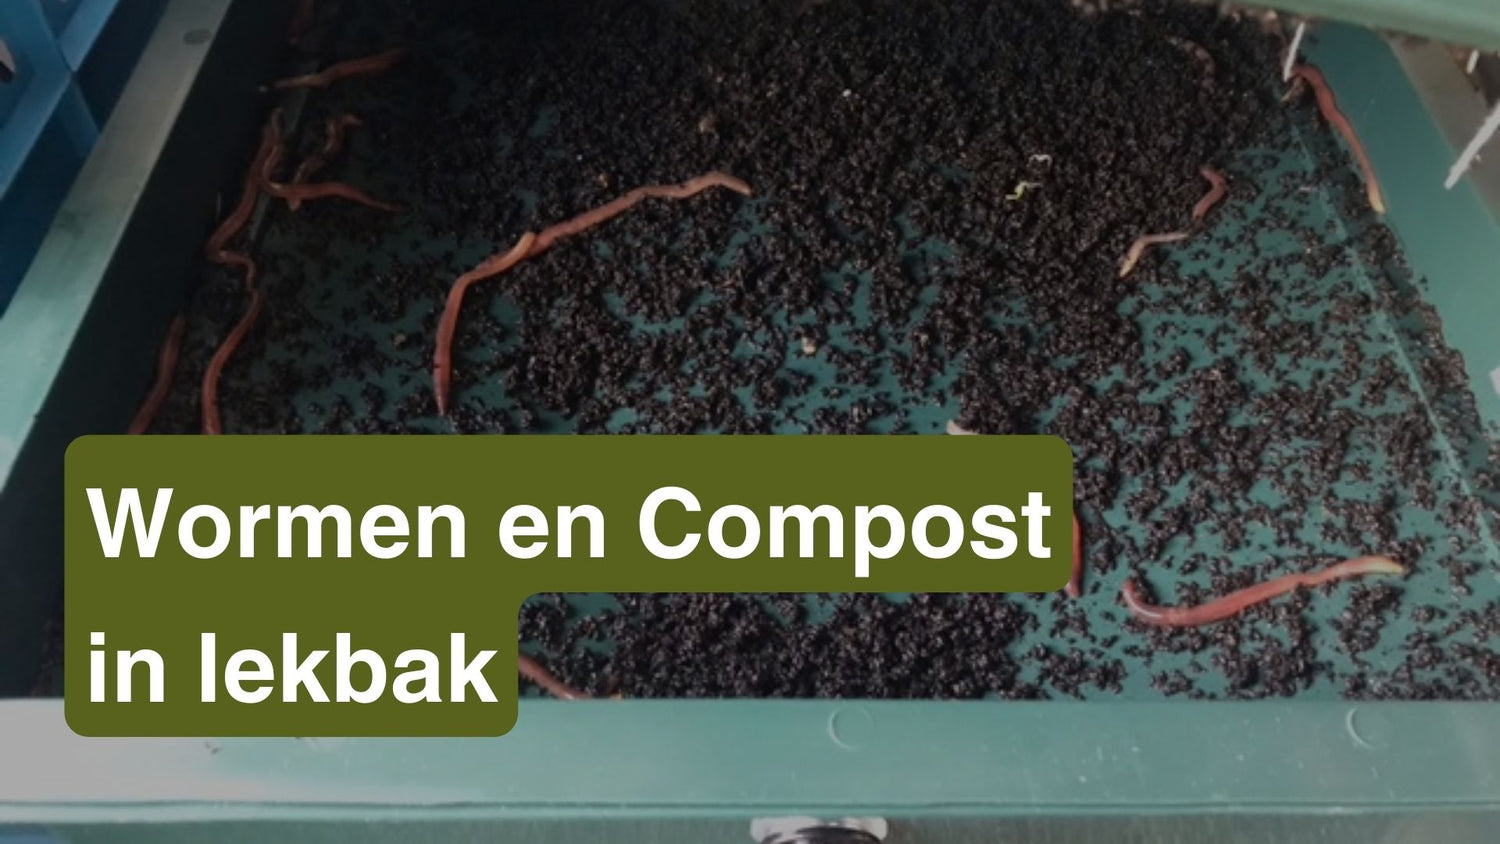 Wormen en compost in lekbak